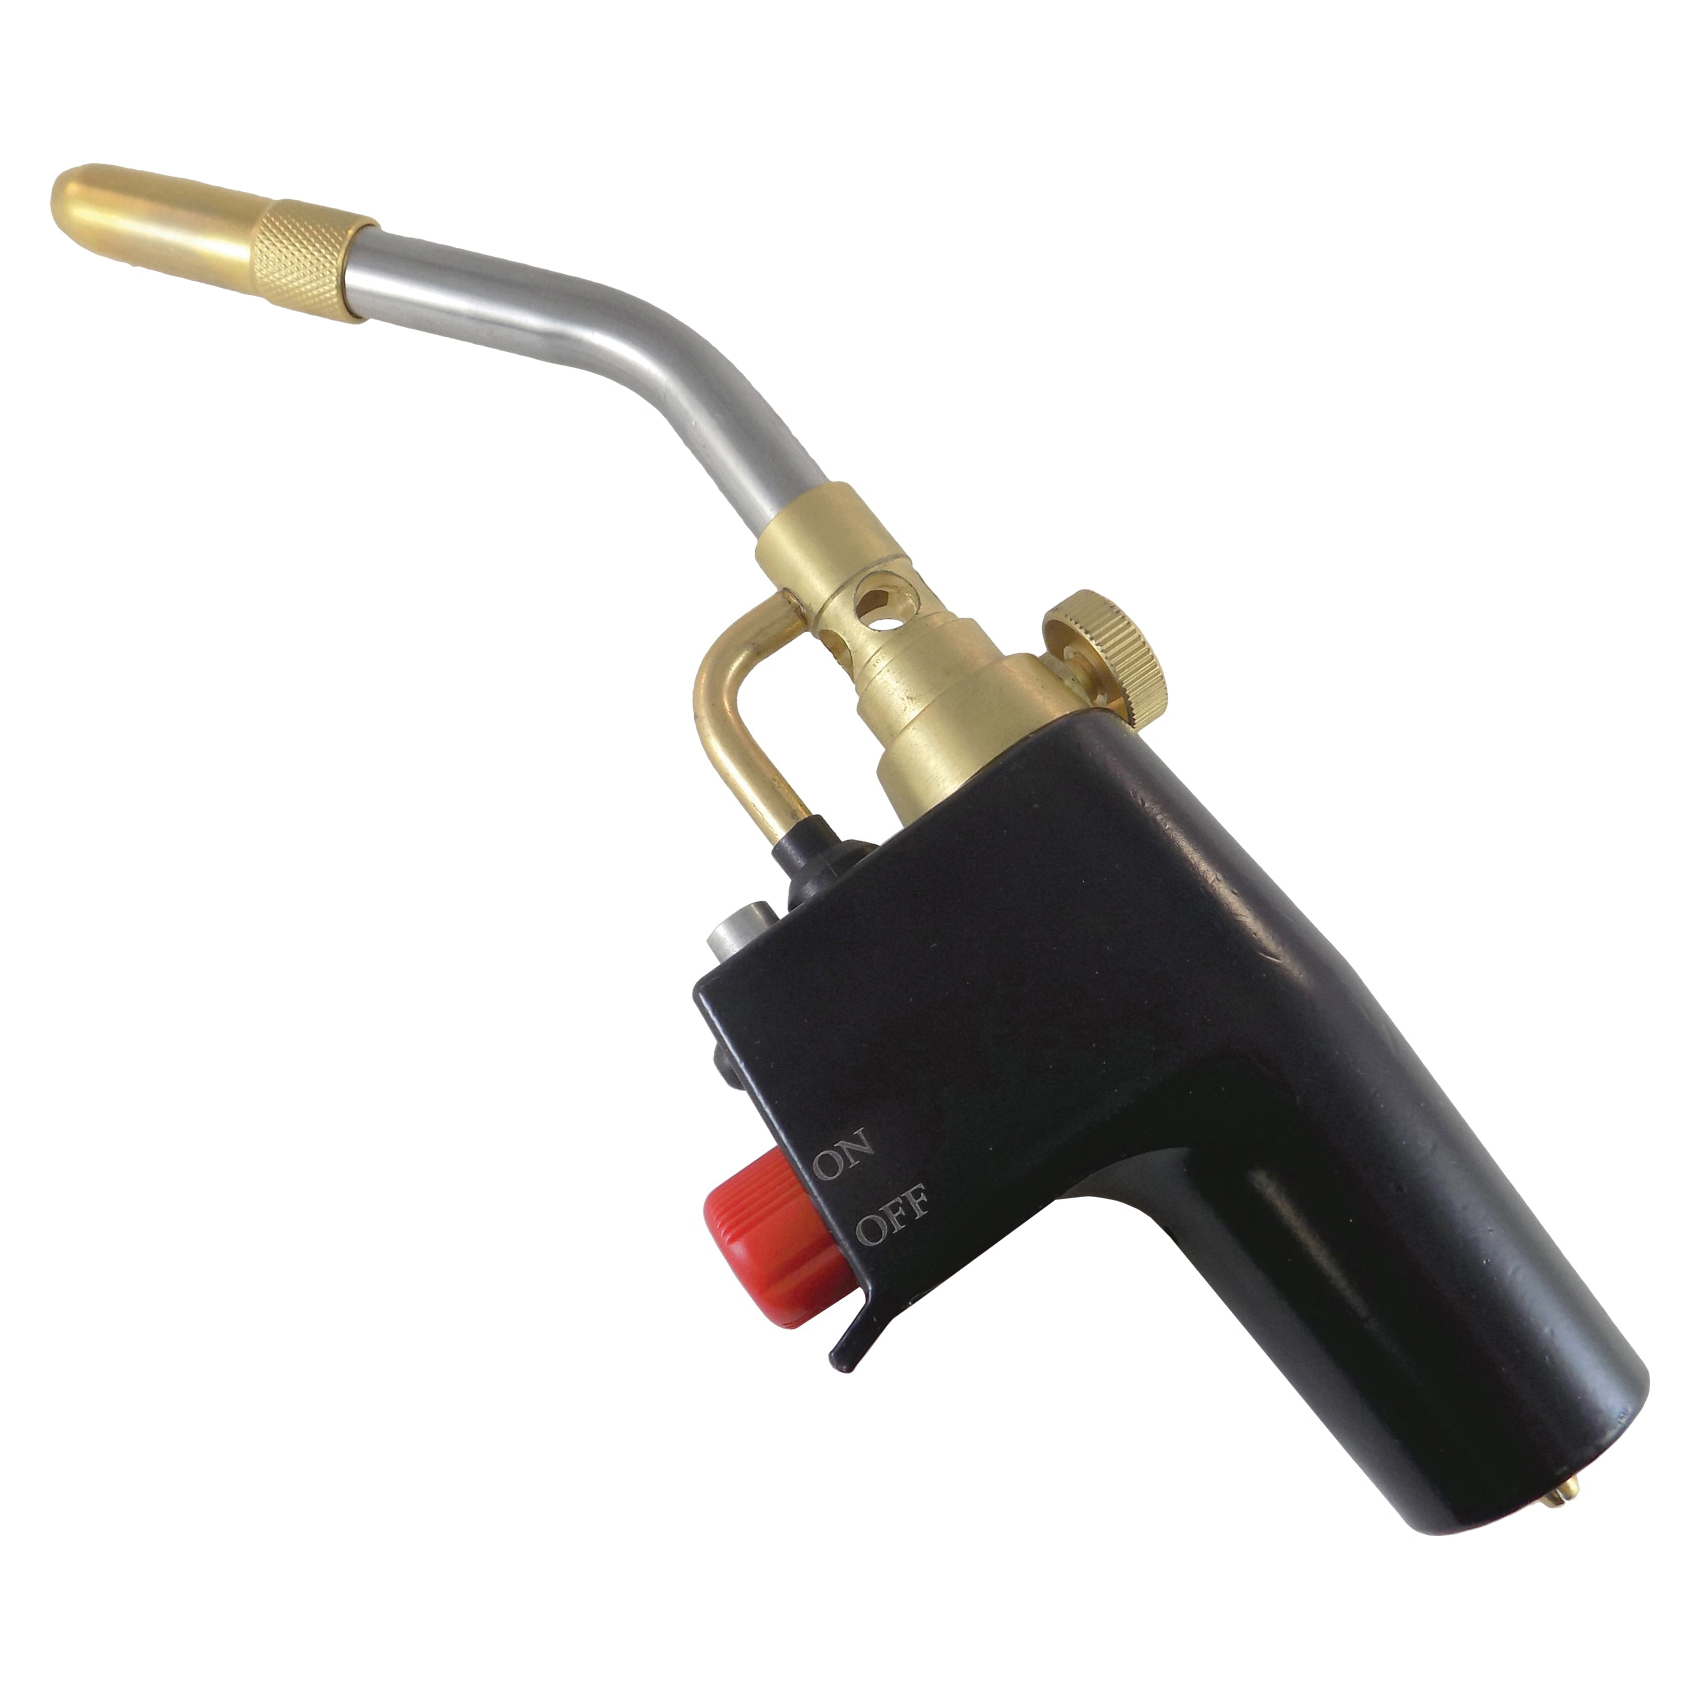 Bramec® 20825 Adjustable Self-Lighting Torch, MAPP, Propane Gas